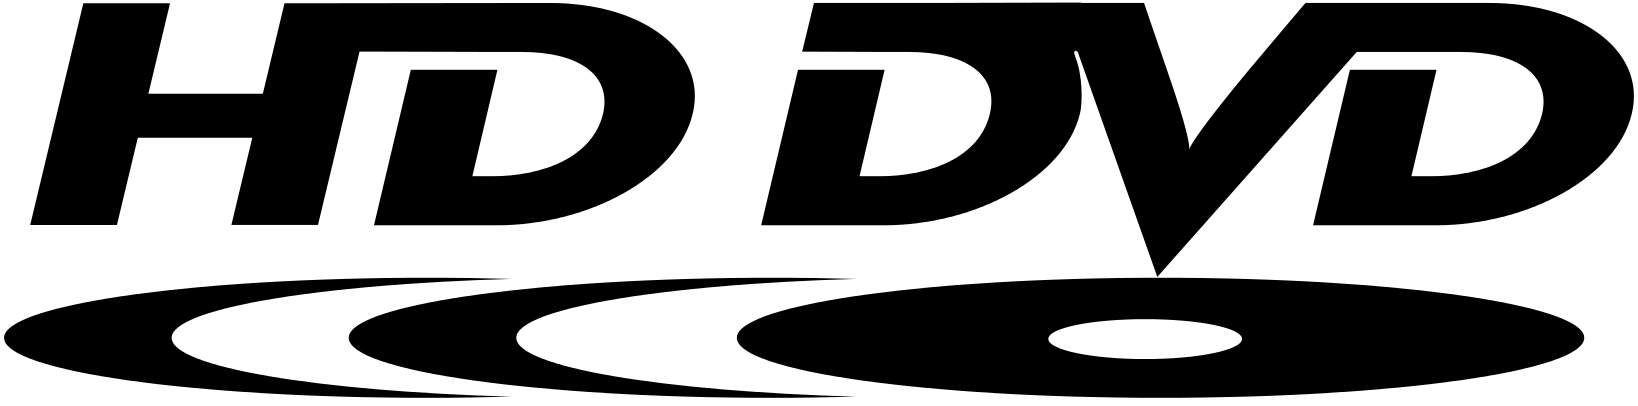 DVD Disc Logo - File:Hd dvd logo.png